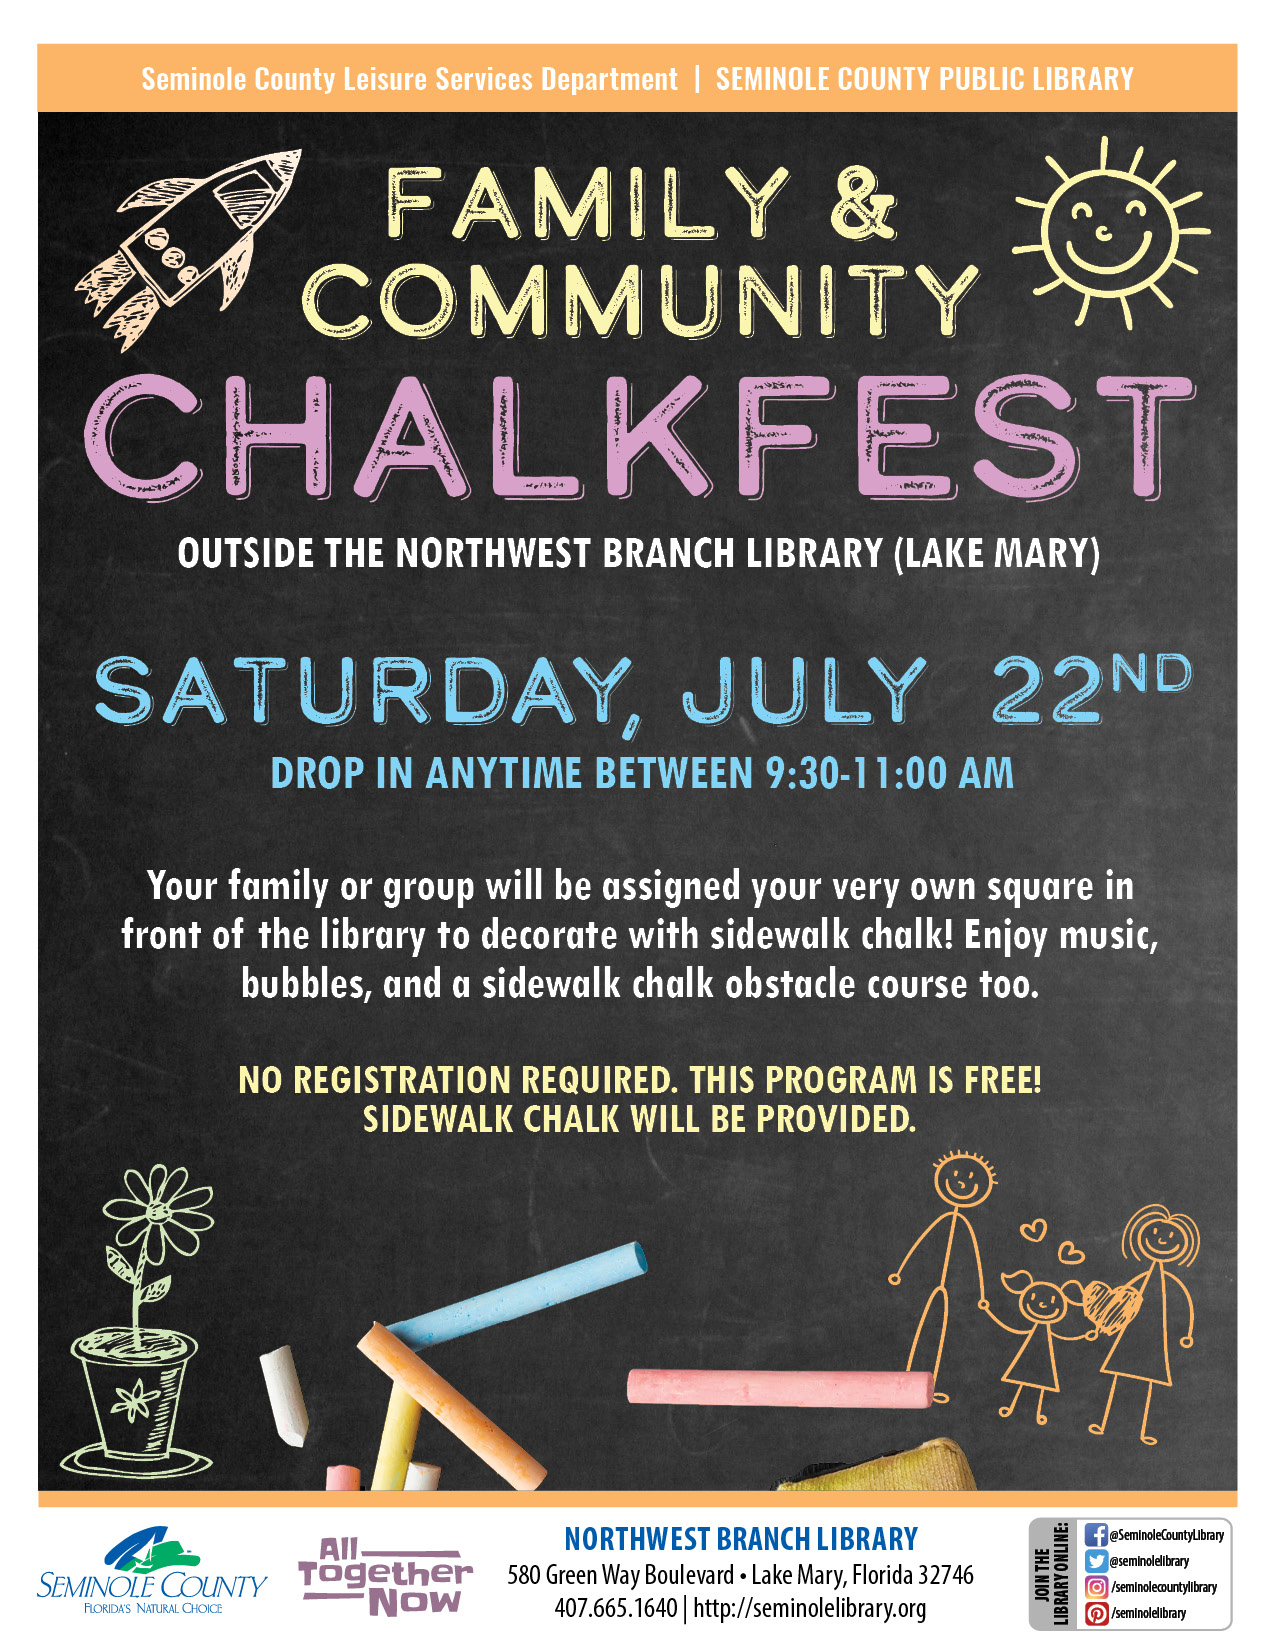 Family & Community ChalkFest - Northwest Branch Library